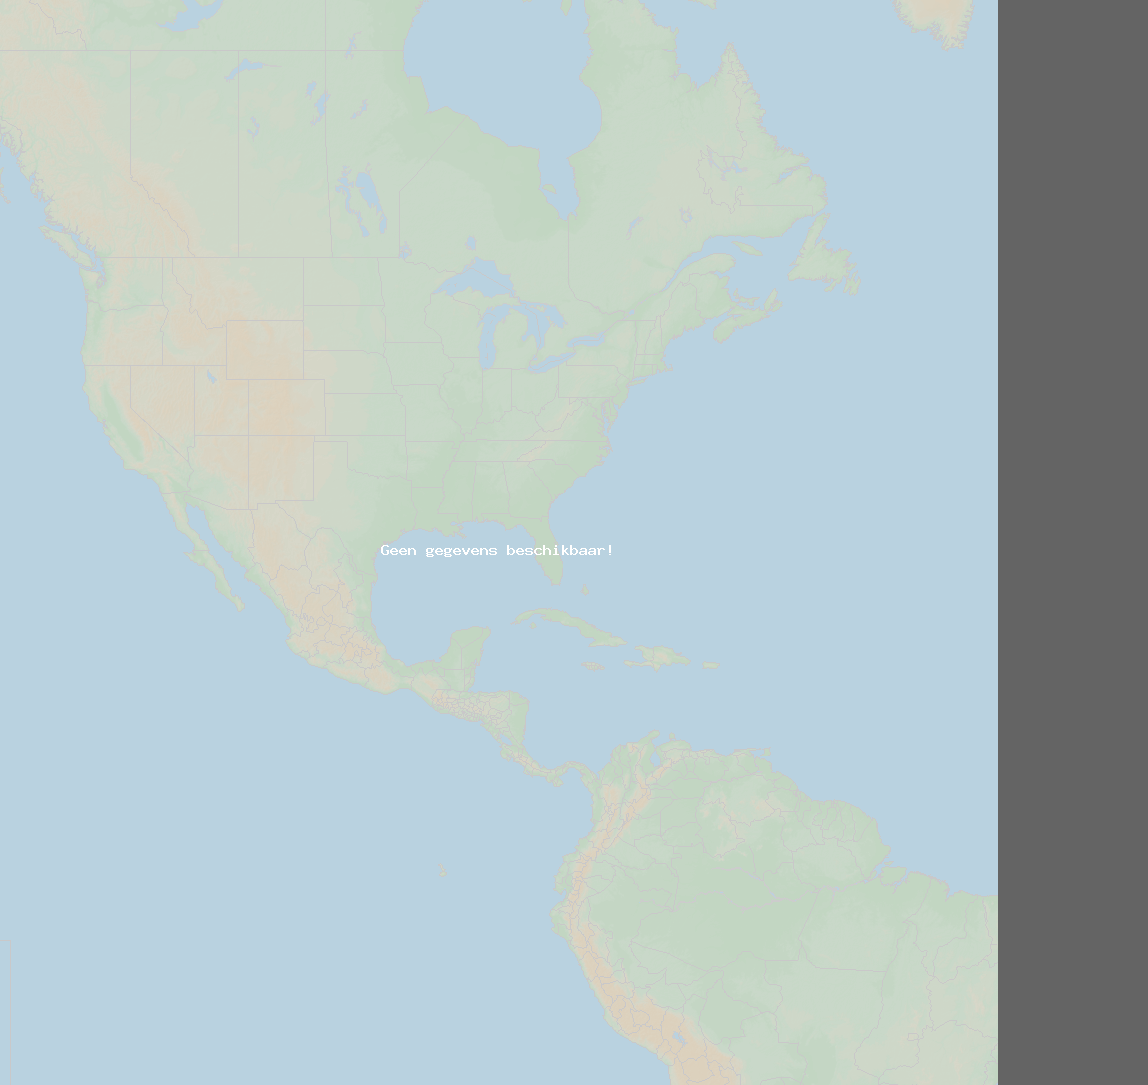 Inslagverhouding (Station Meteor O-I  'North') North America 2020 april